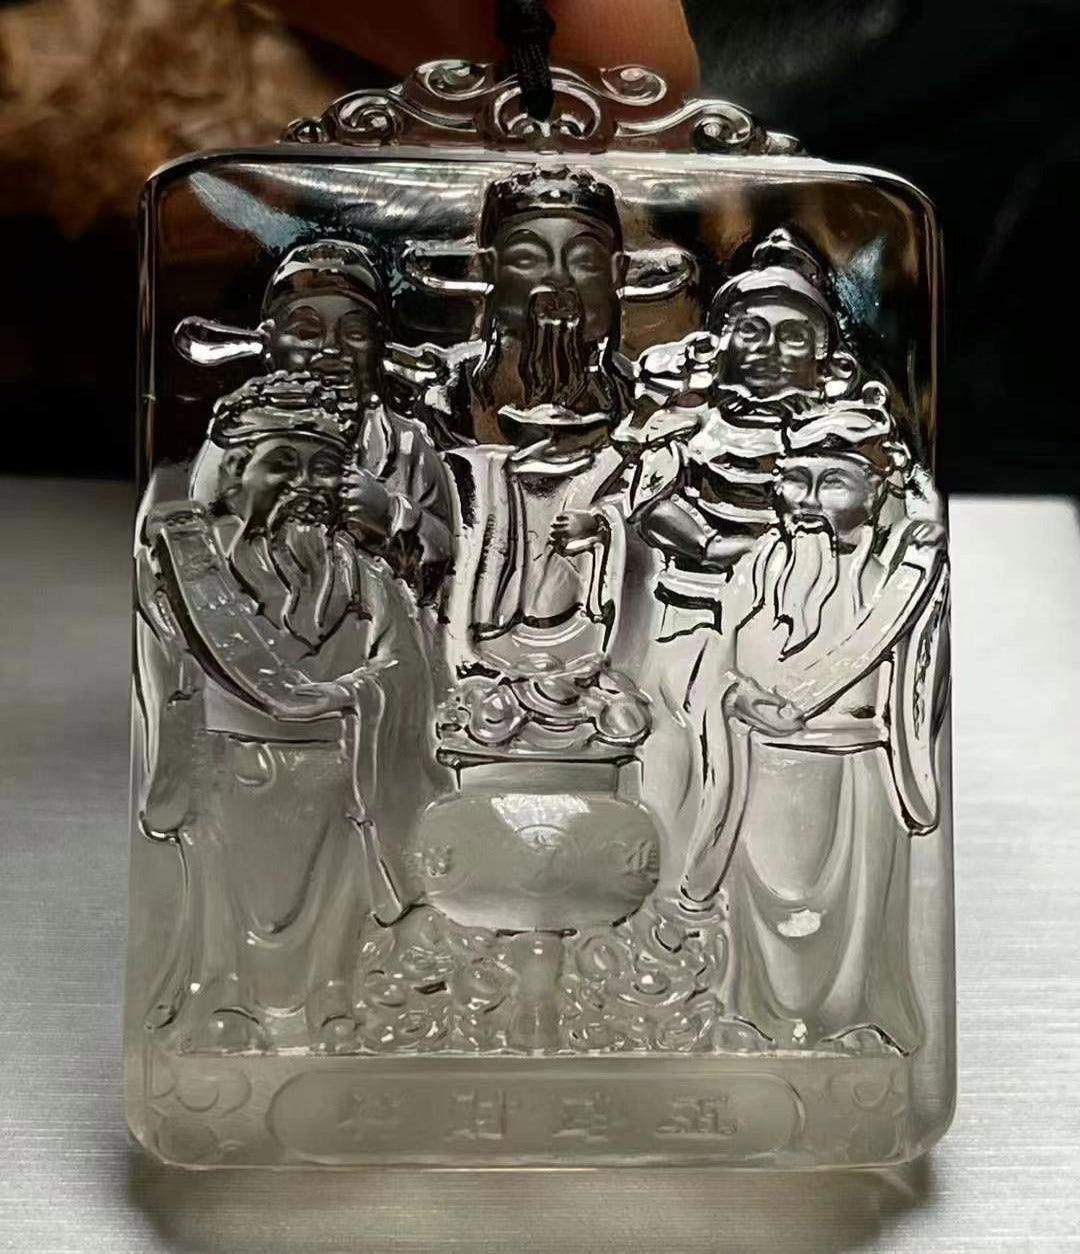 Collection of Superb large Natural Light Tea Crystal Carved Five-Way God of Wealth Pendant.